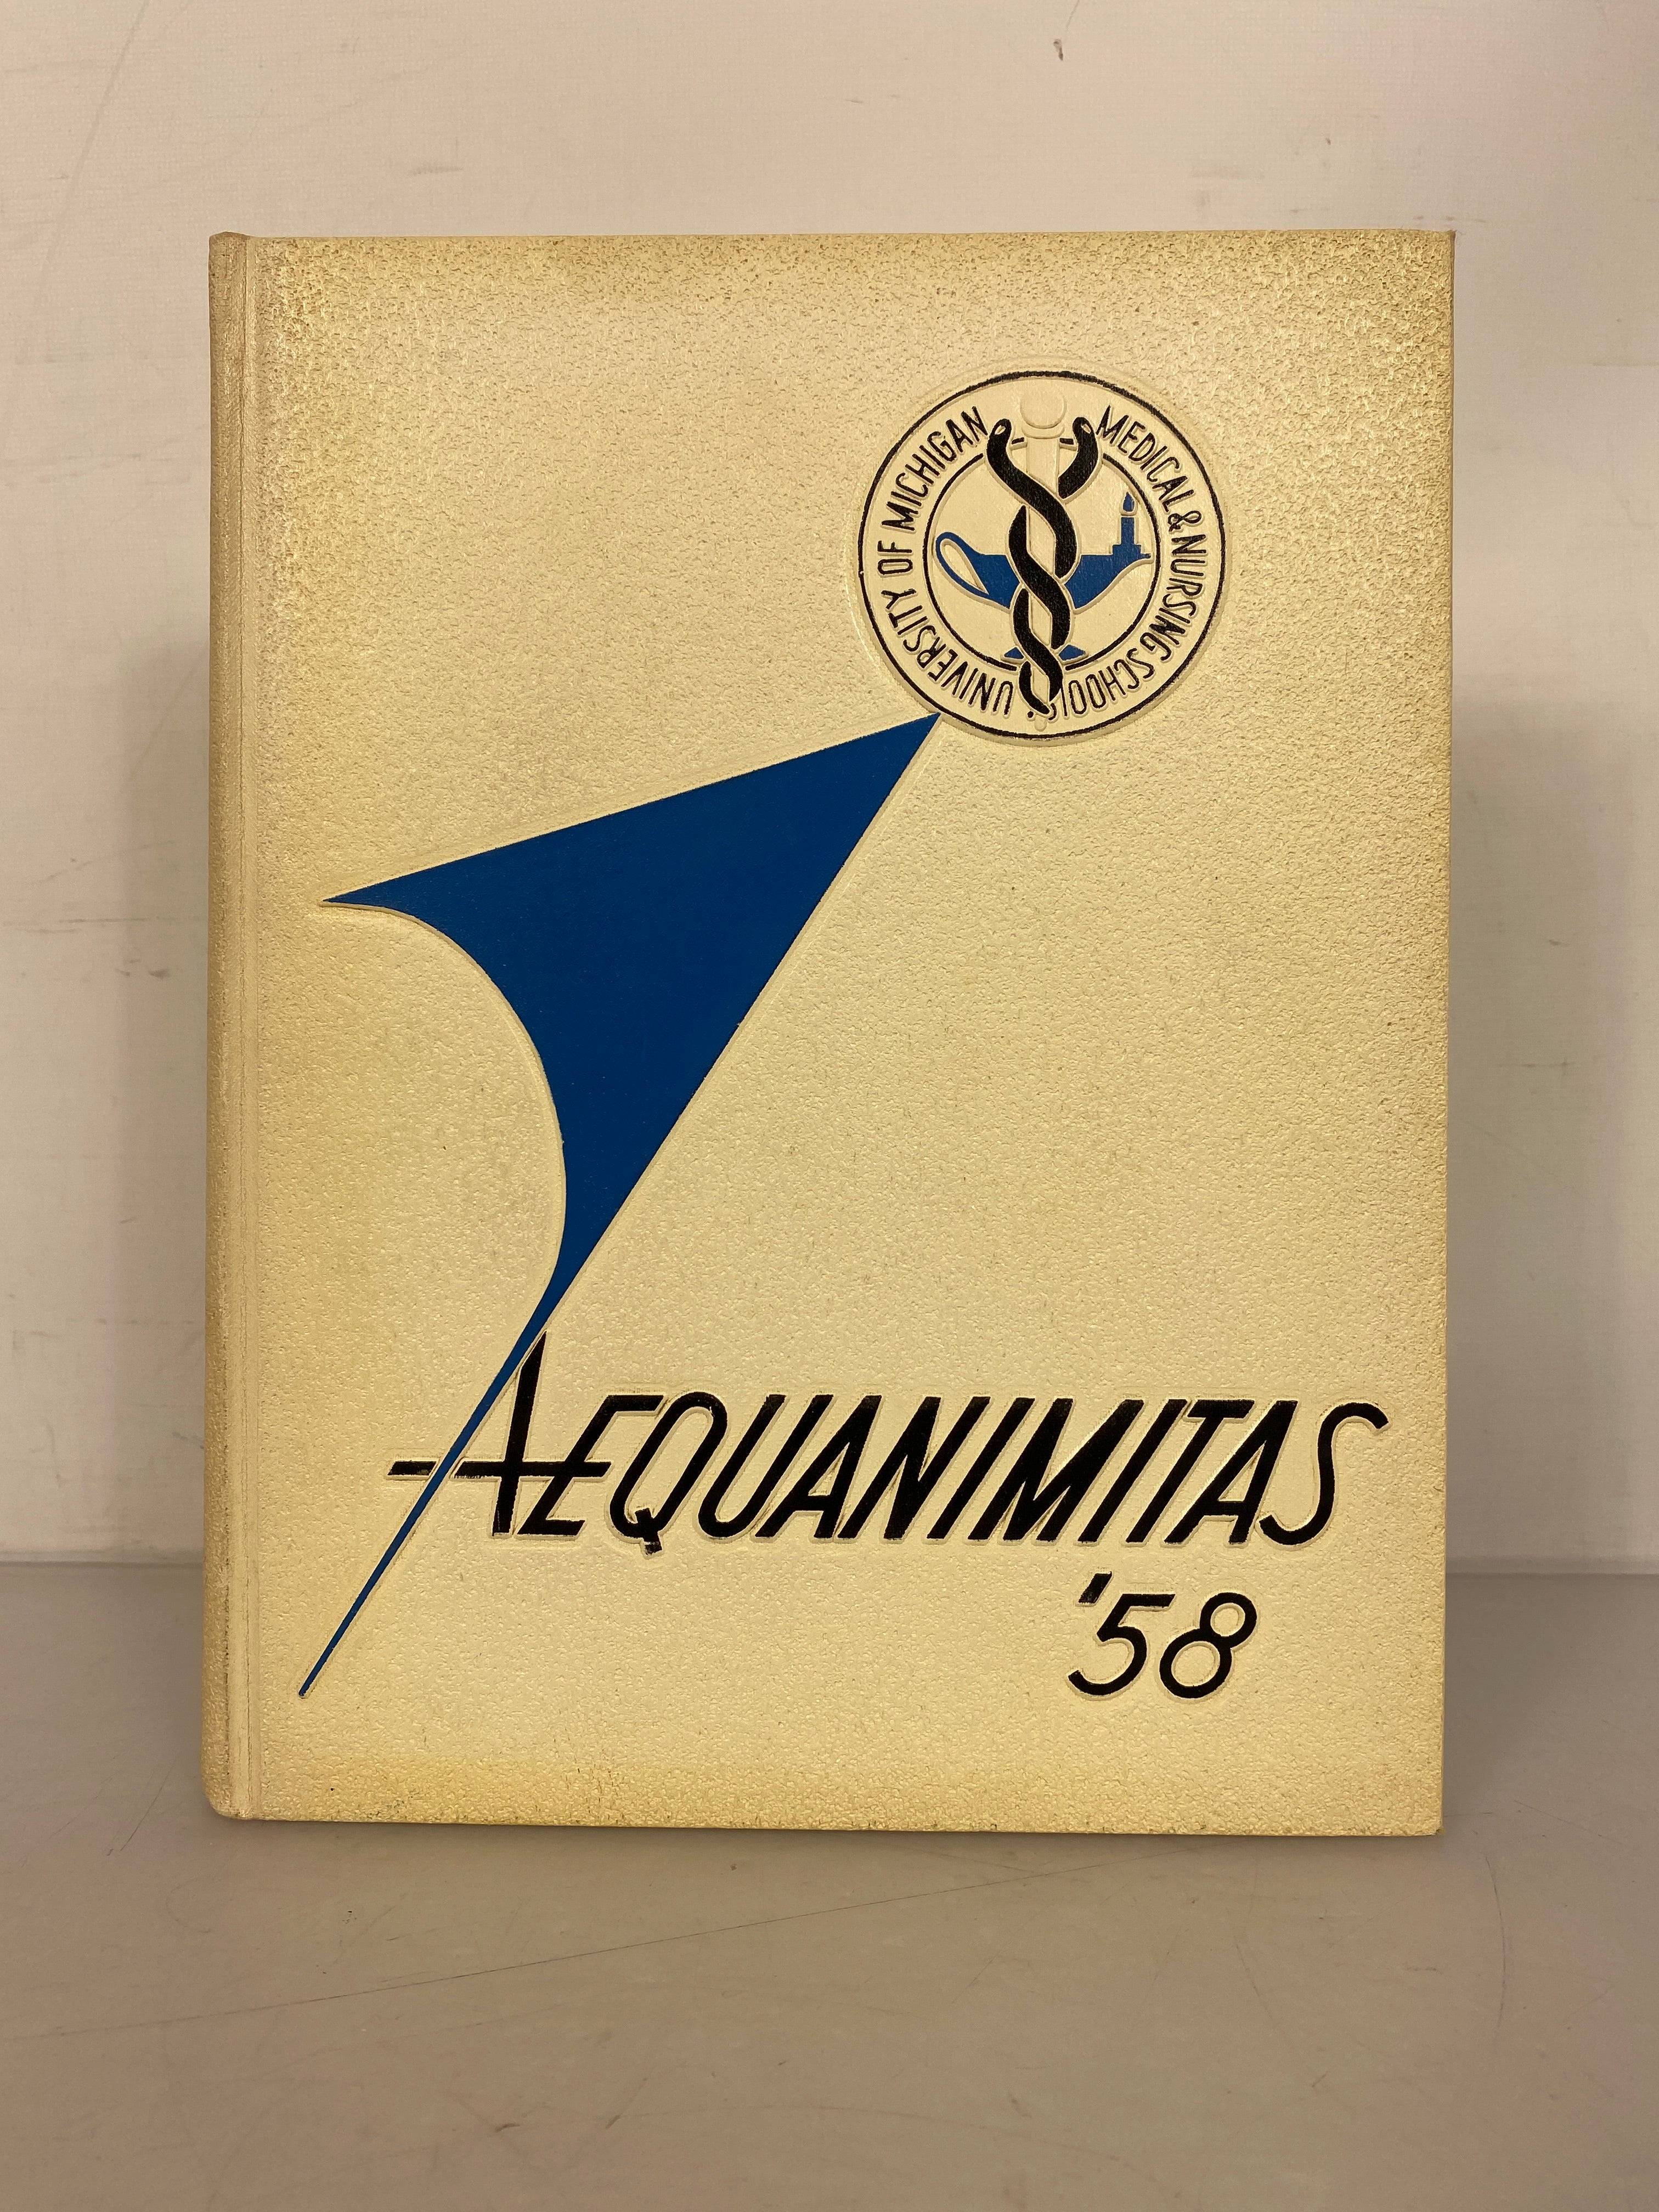 1958 University of Michigan Medical & Nursing School Yearbook "Aequanimitas" Ann Arbor Michigan